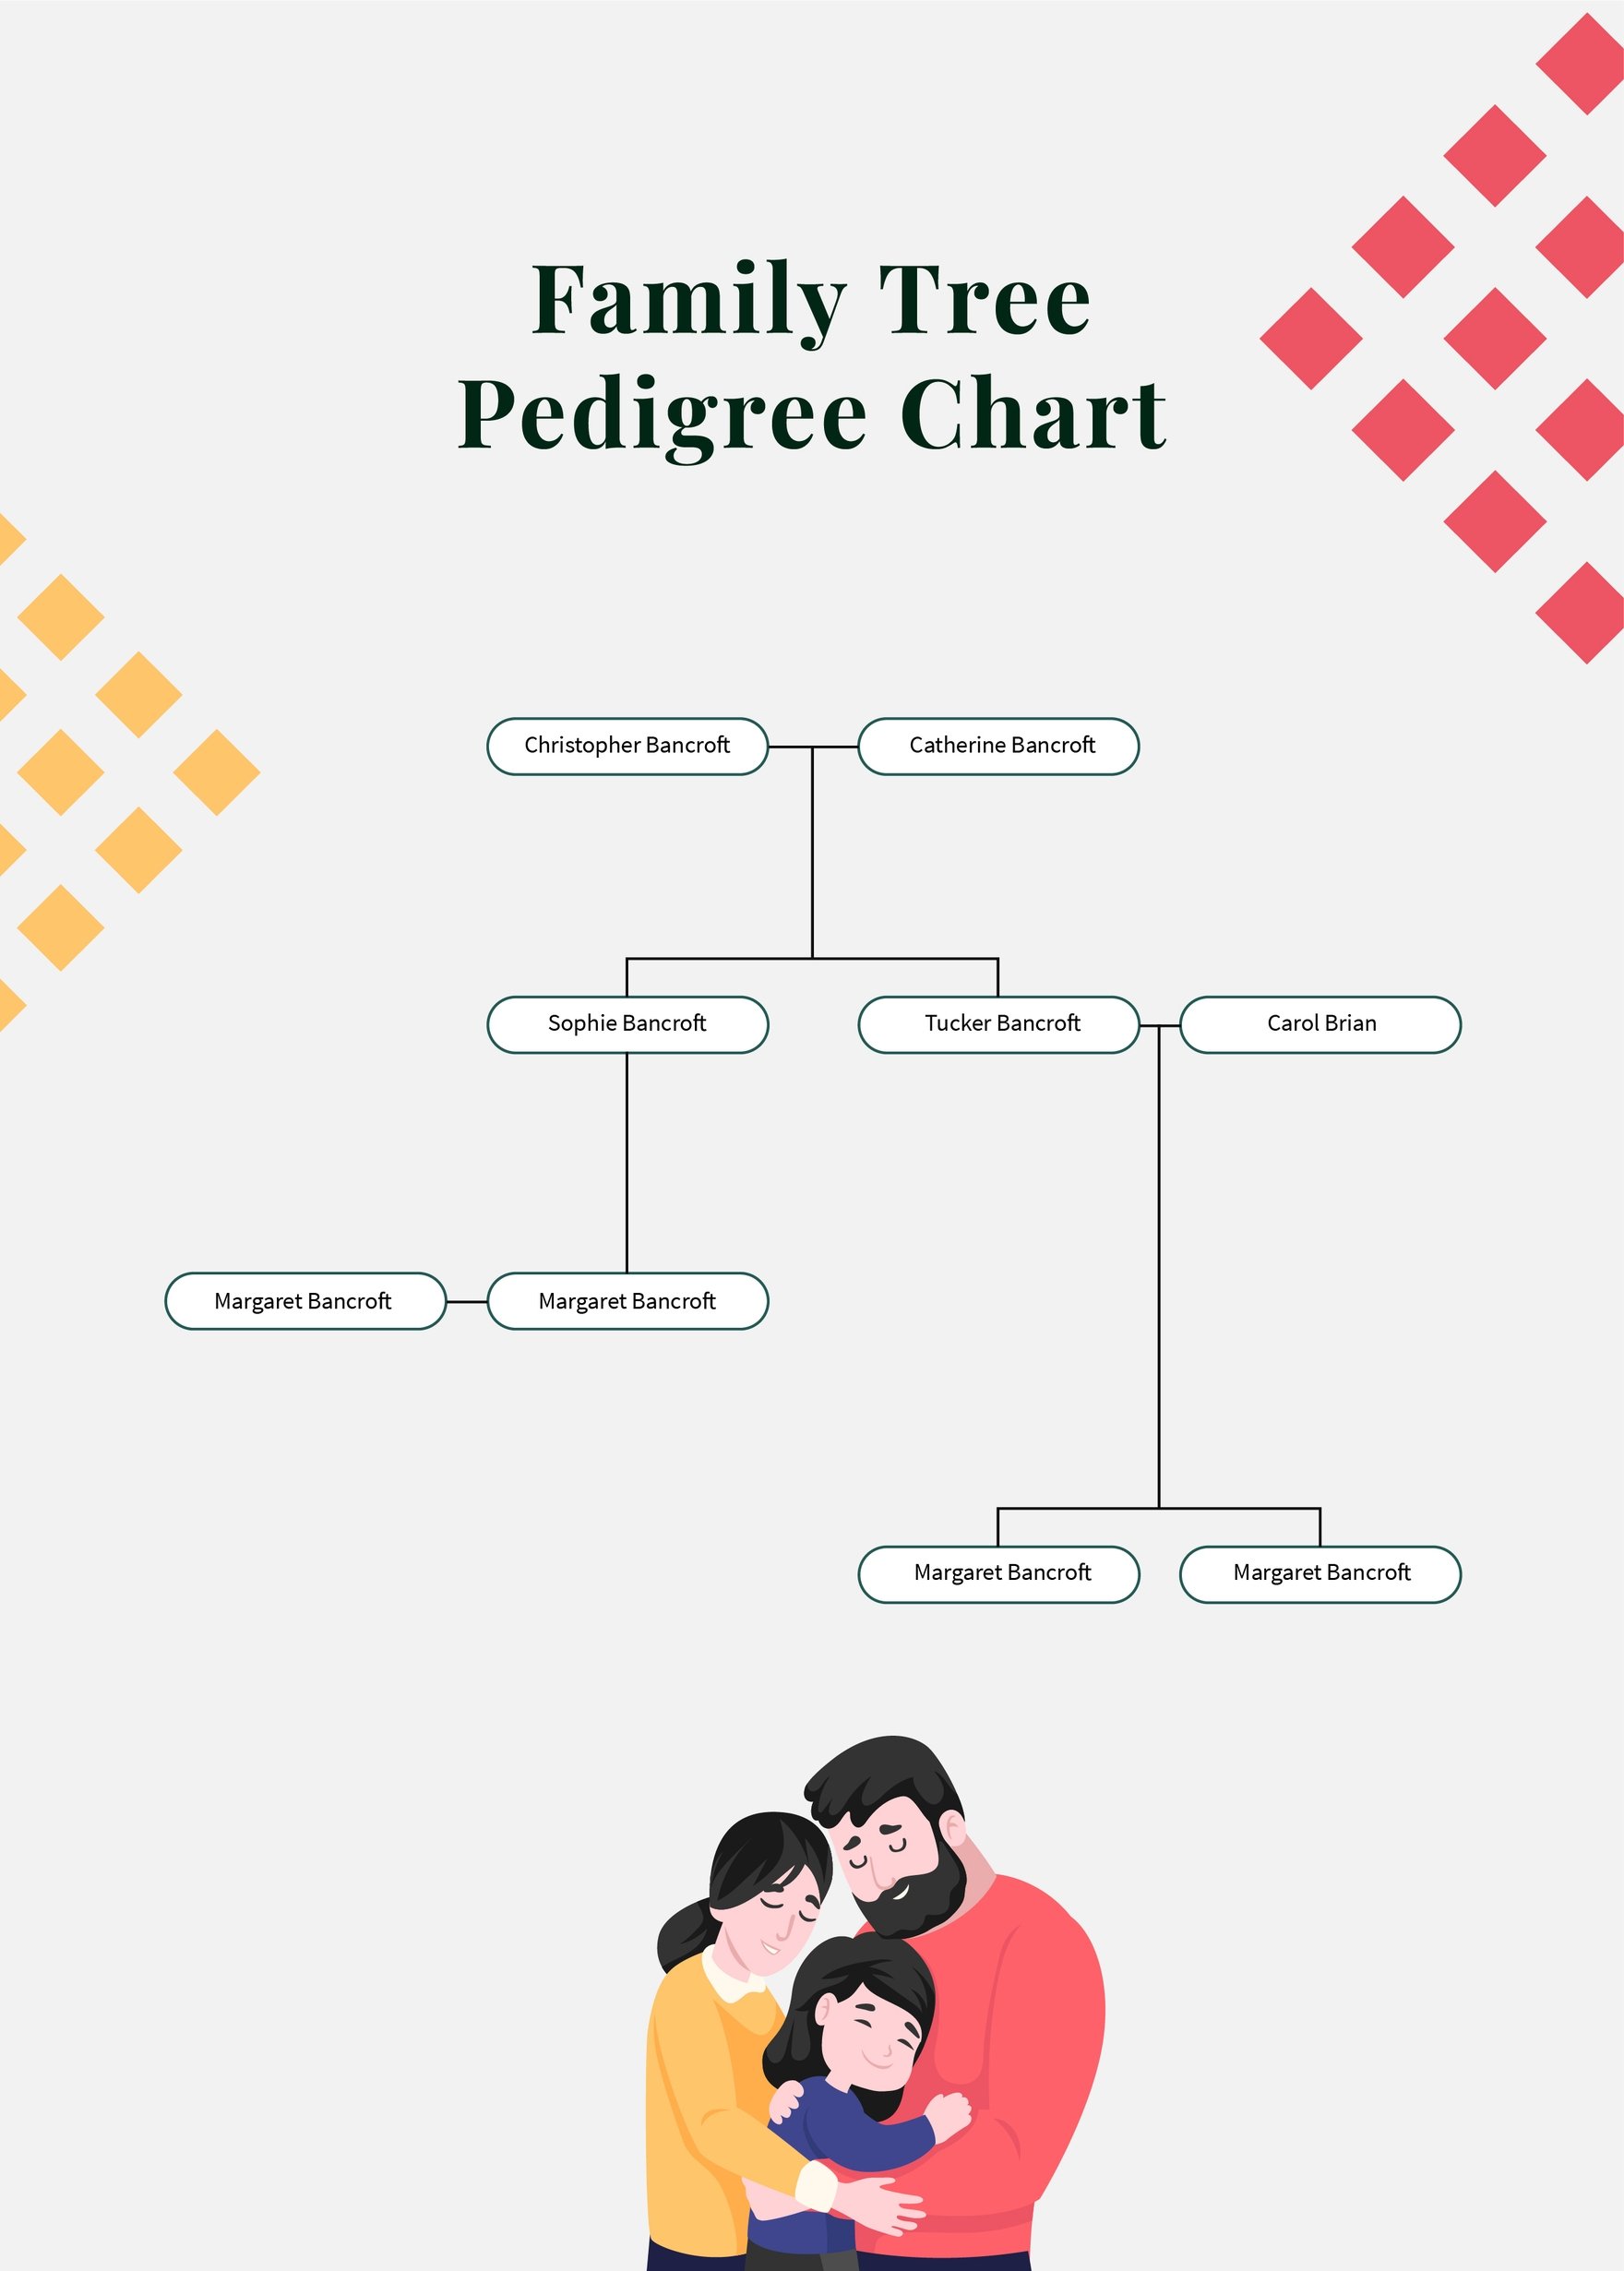 Family Tree Pedigree Chart